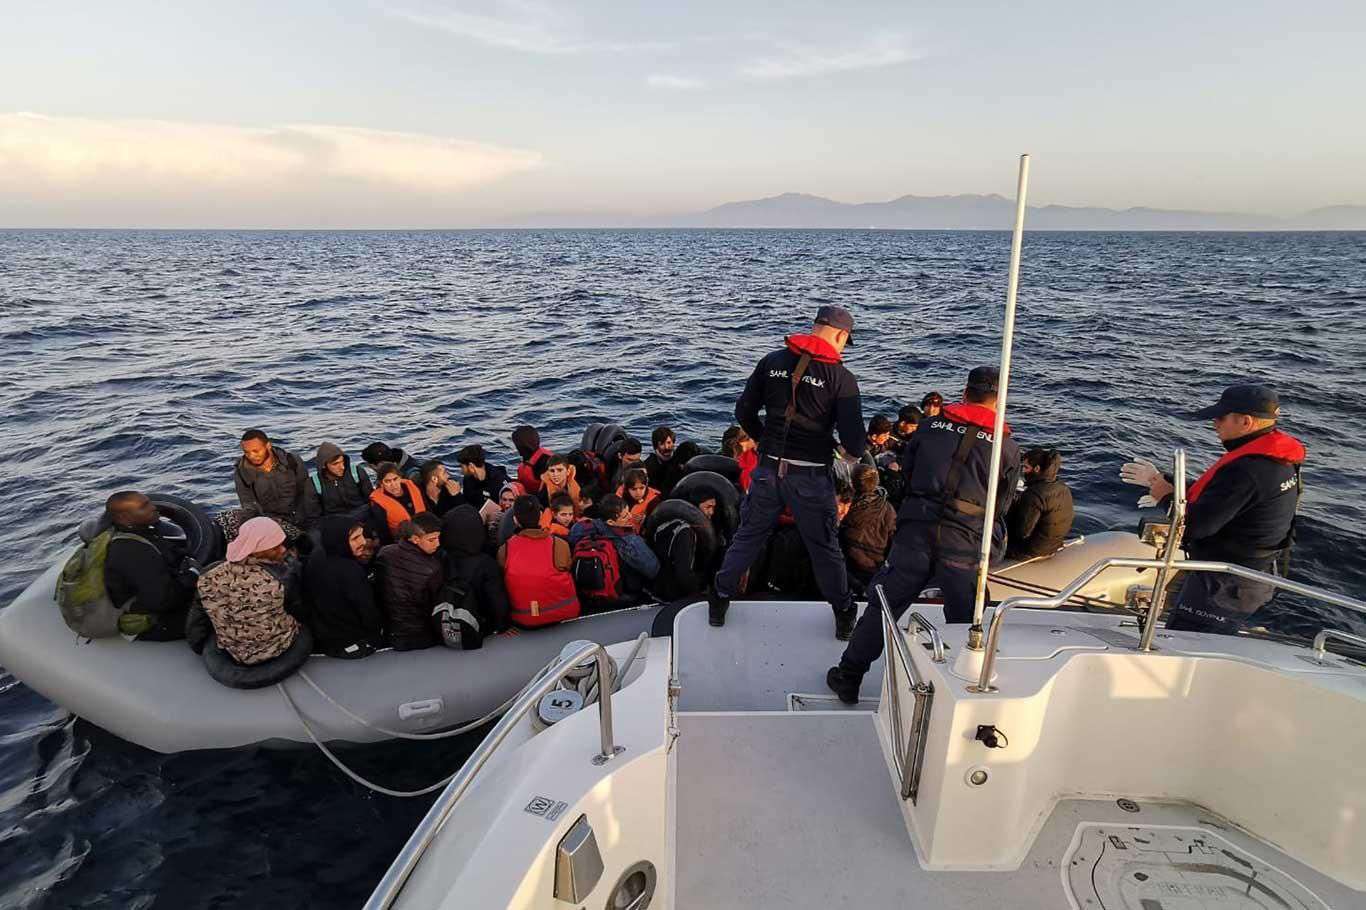 59 irregular migrants rescued off Turkey's Aegean coast